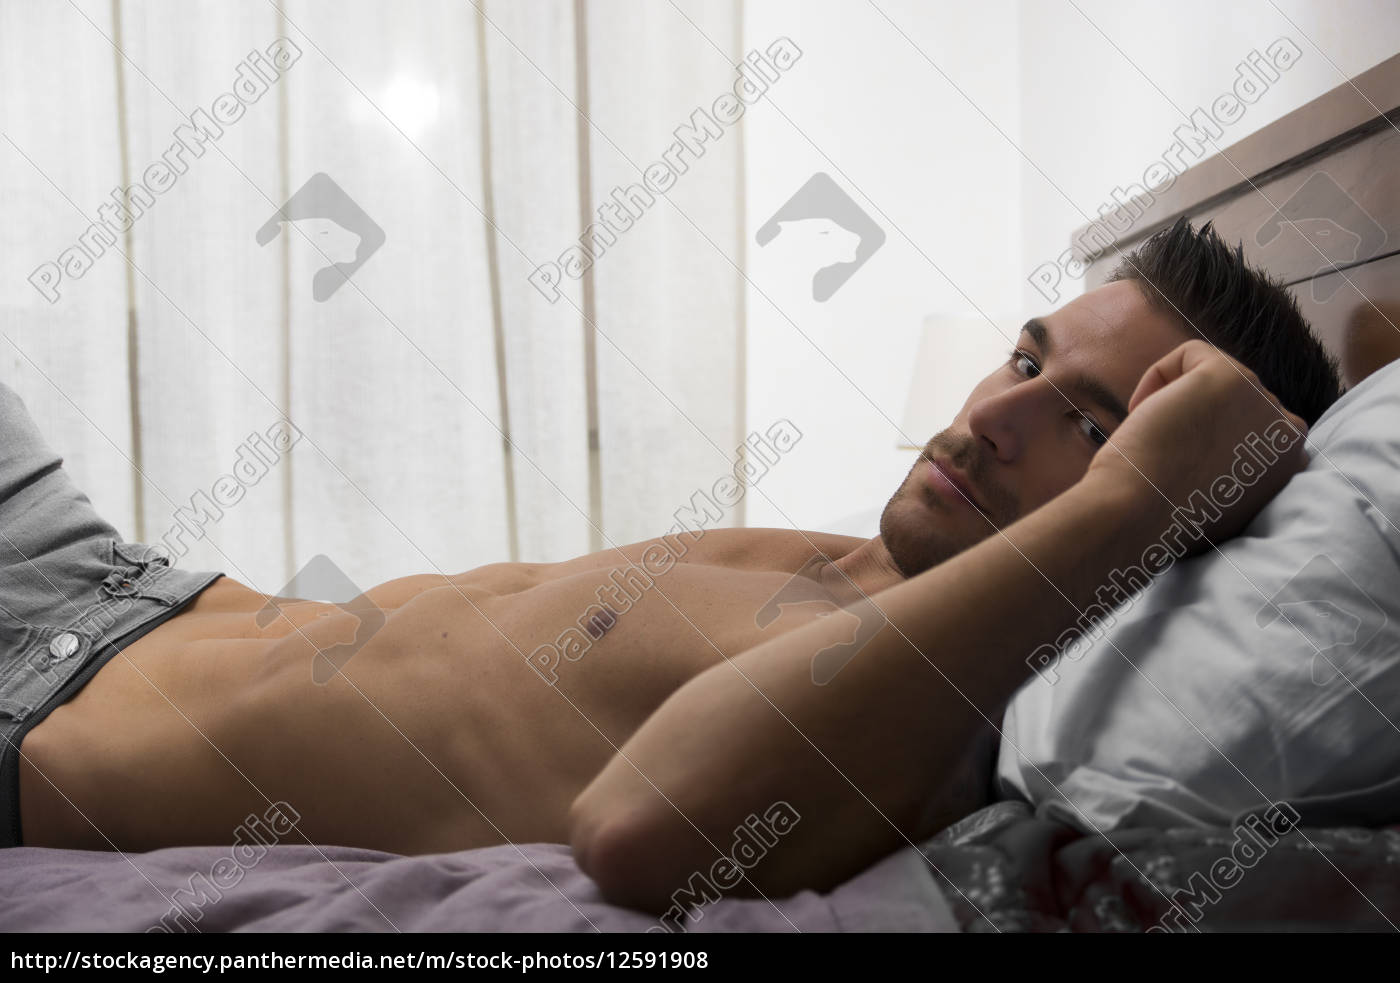 ash tahir share sexy man laying down photos